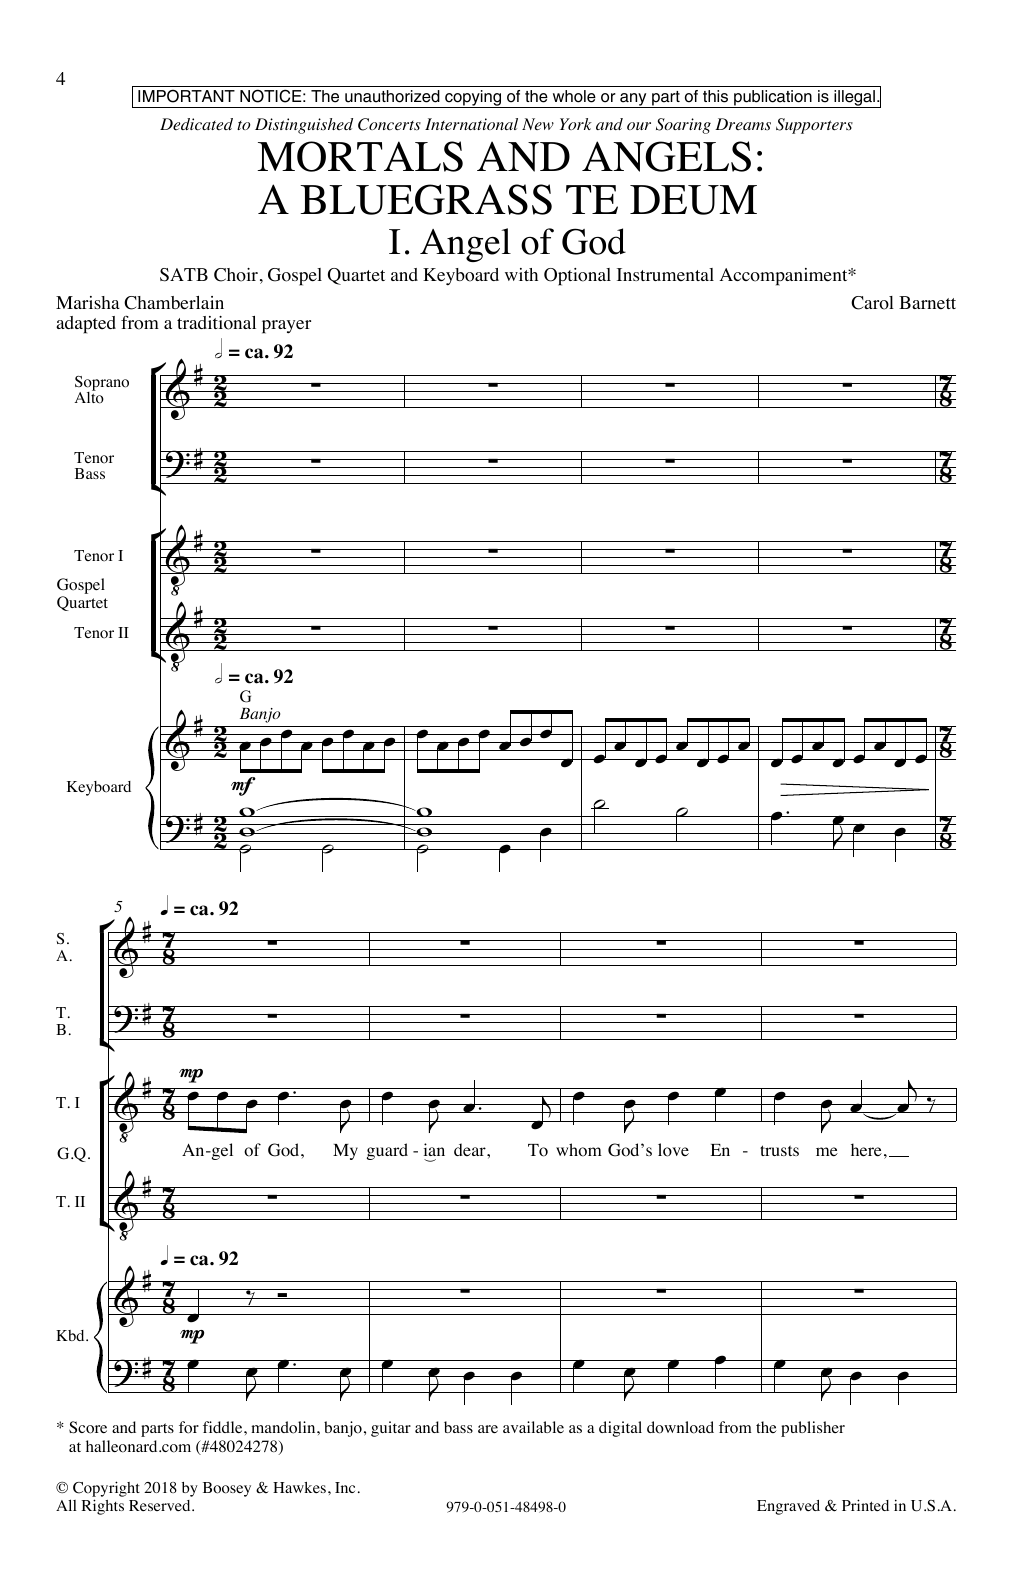 Carol Barnett Mortals & Angels: A Bluegrass Te Deum sheet music notes and chords arranged for SATB Choir